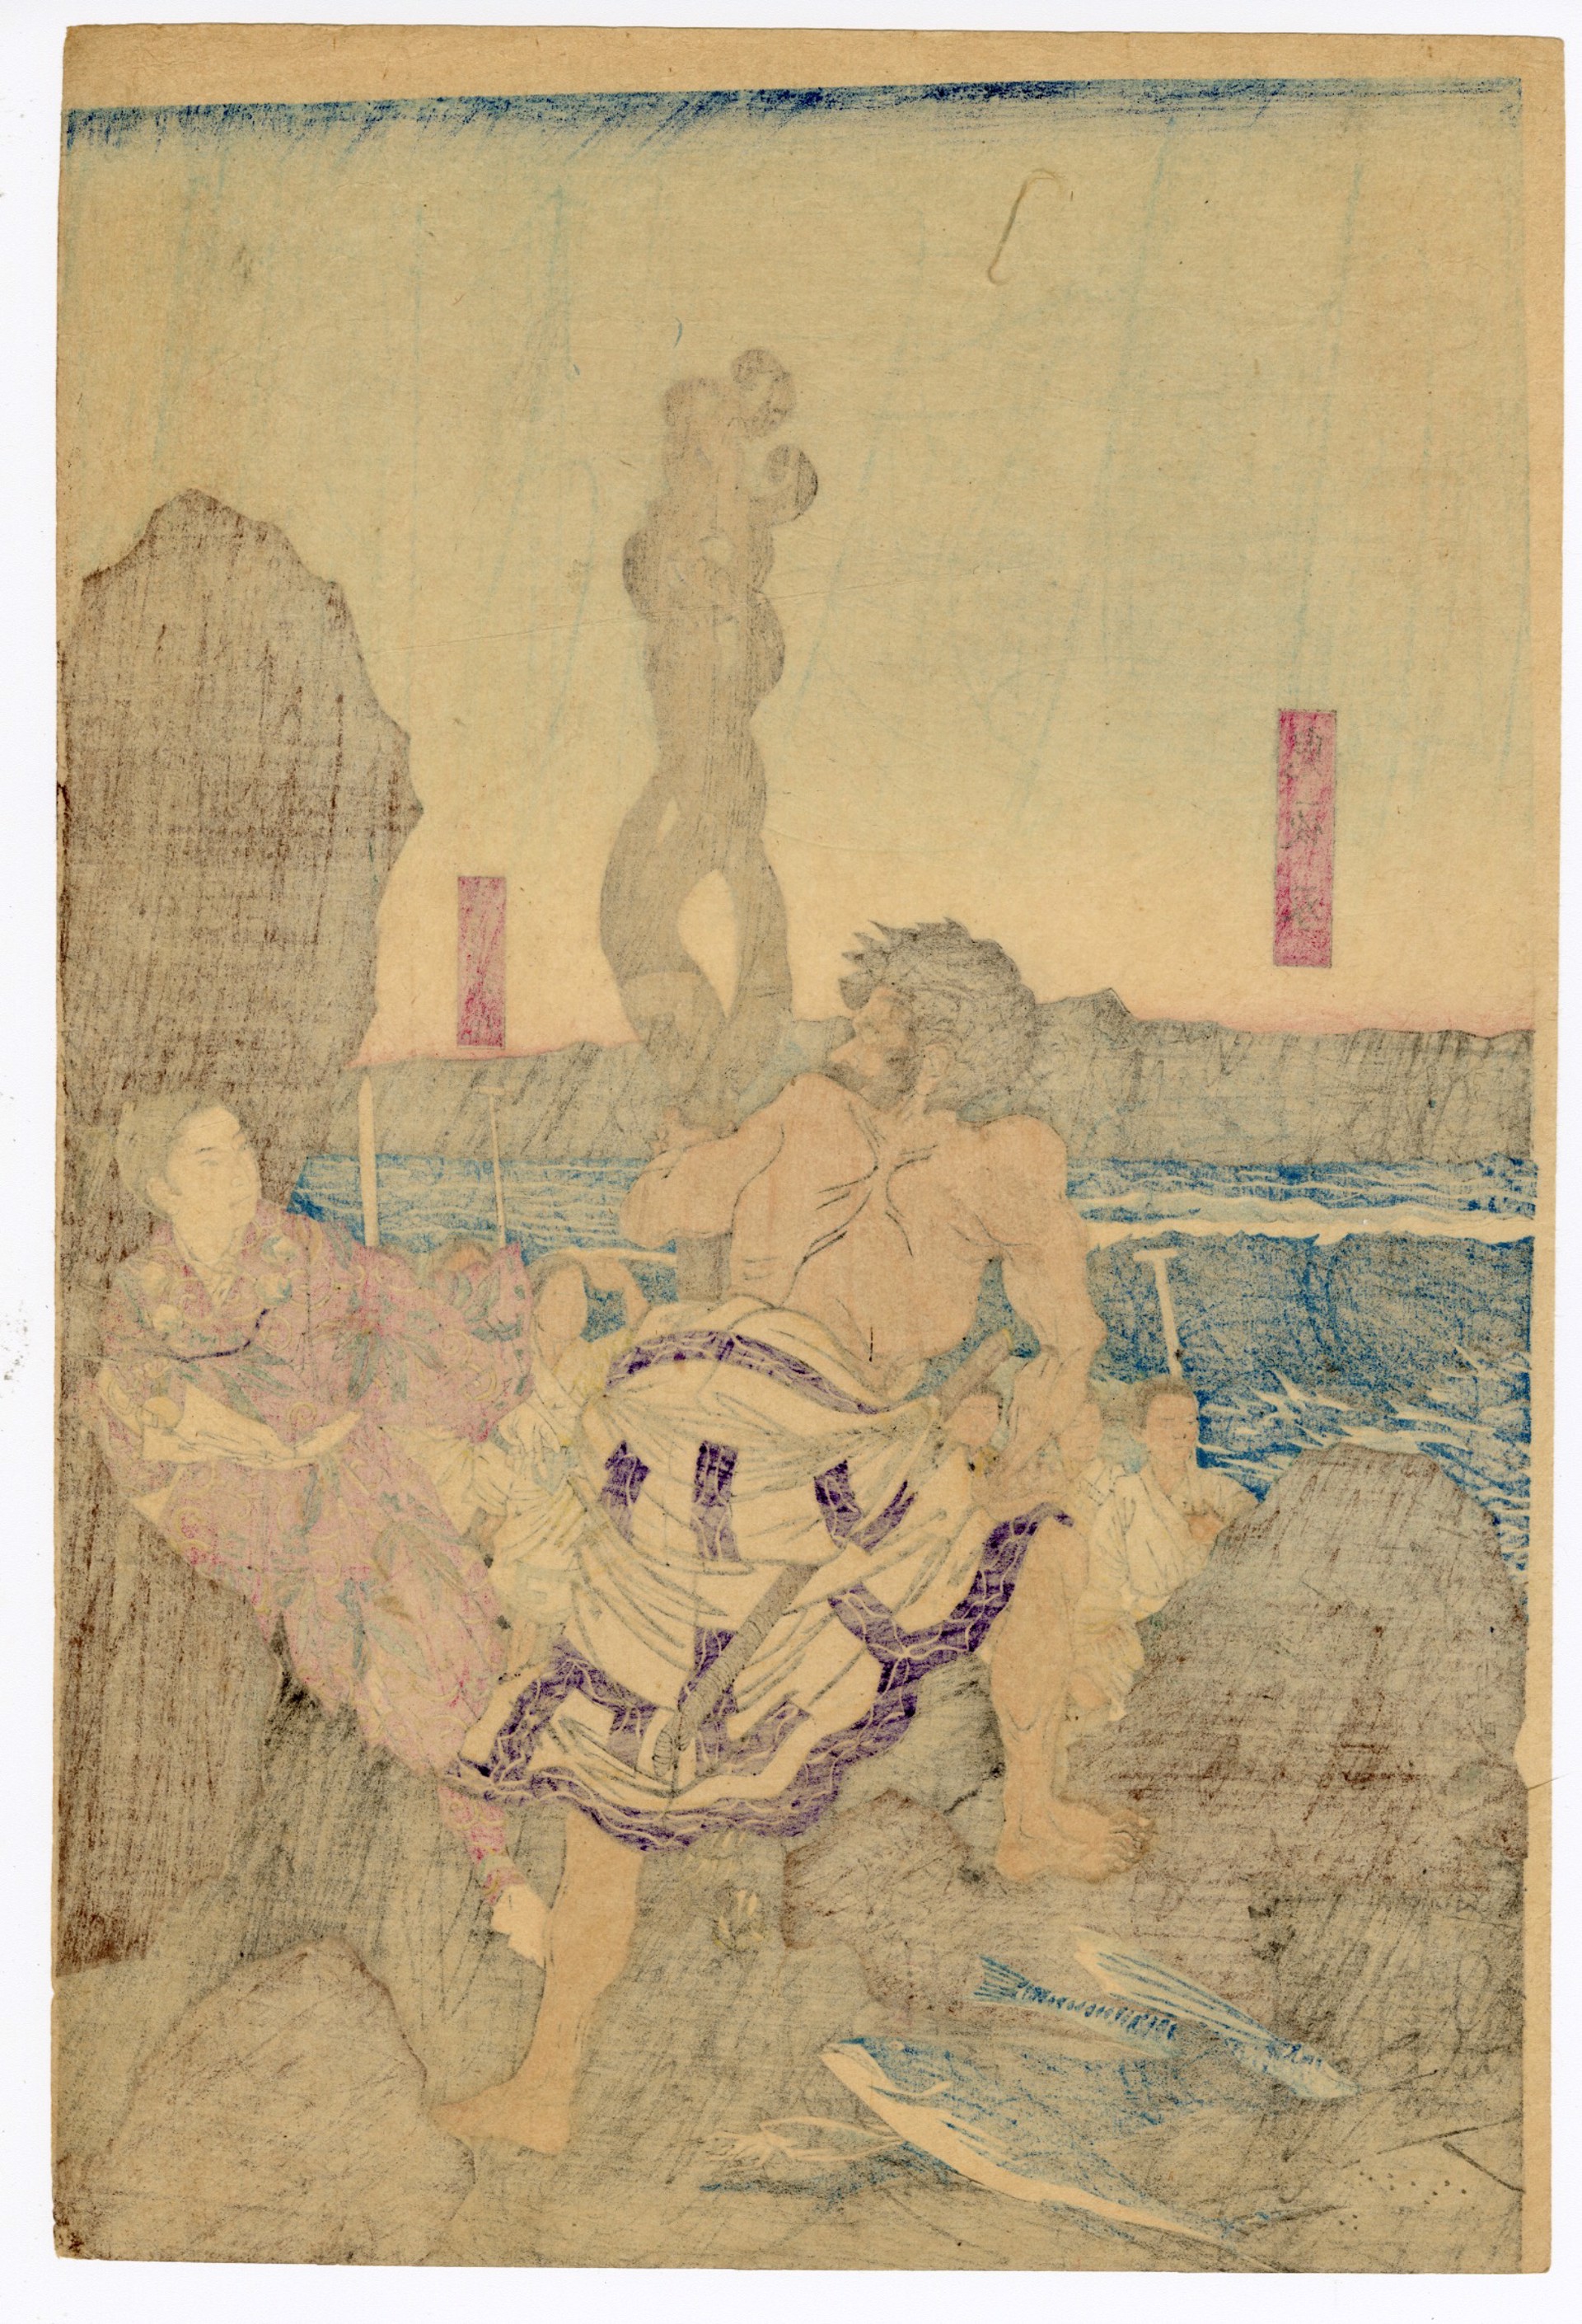 Minamoto Tameyoshi's Son Tametomo (1139-70) Stares at the Ocean with its Incoming Fleet of Ships by Kiyochika